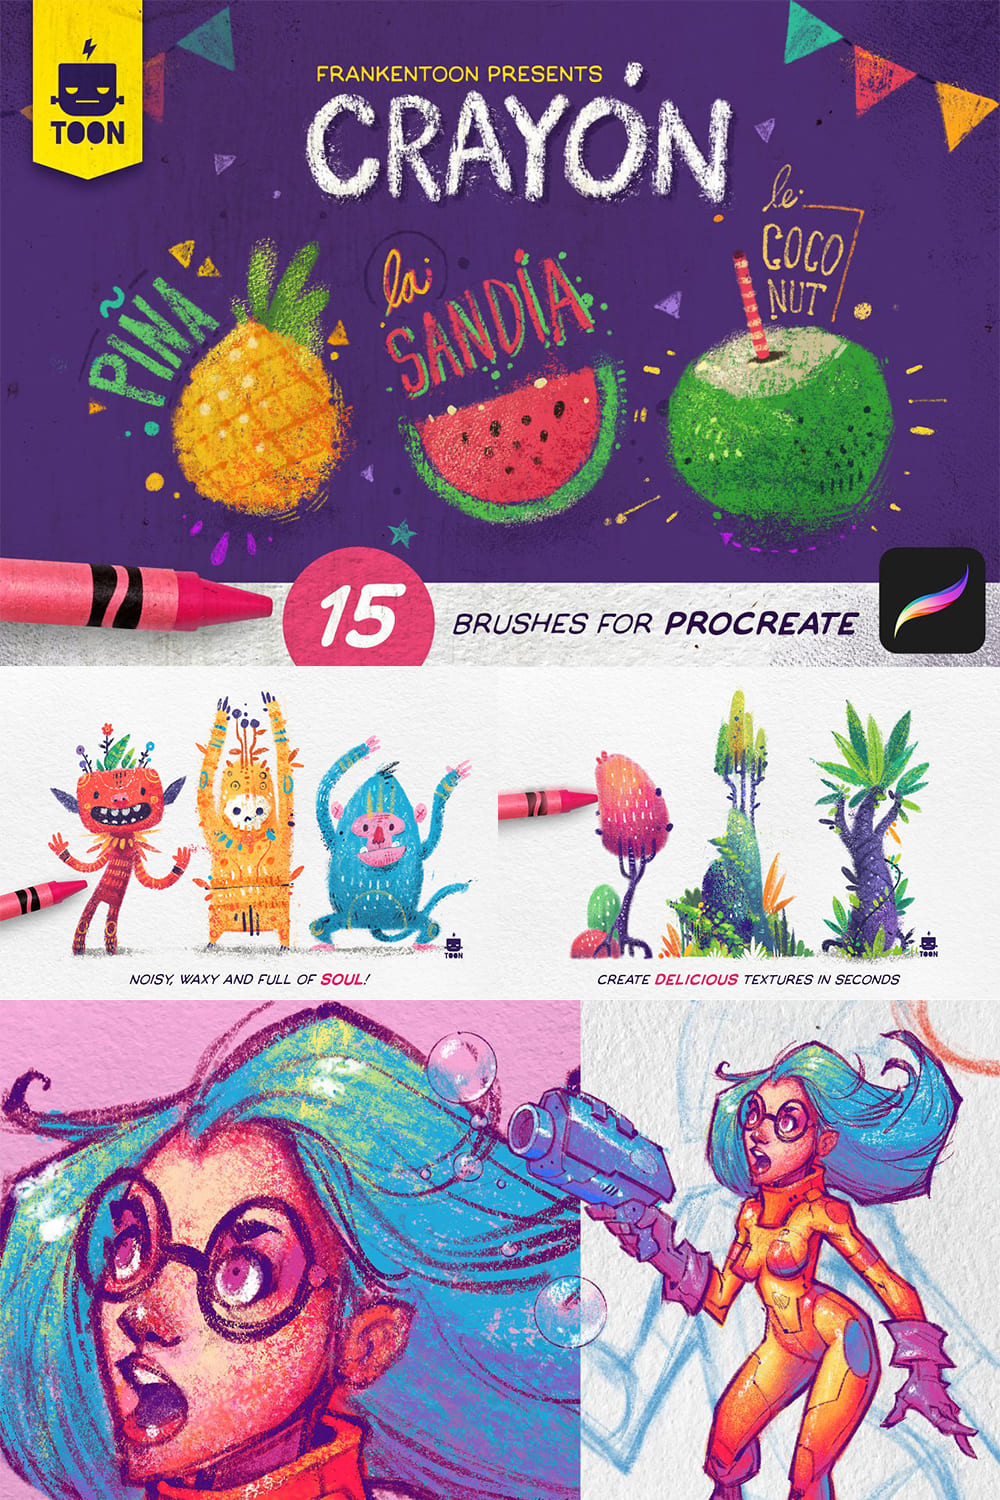 Frankentoon Presents - Crayon Brush Pack Preview.